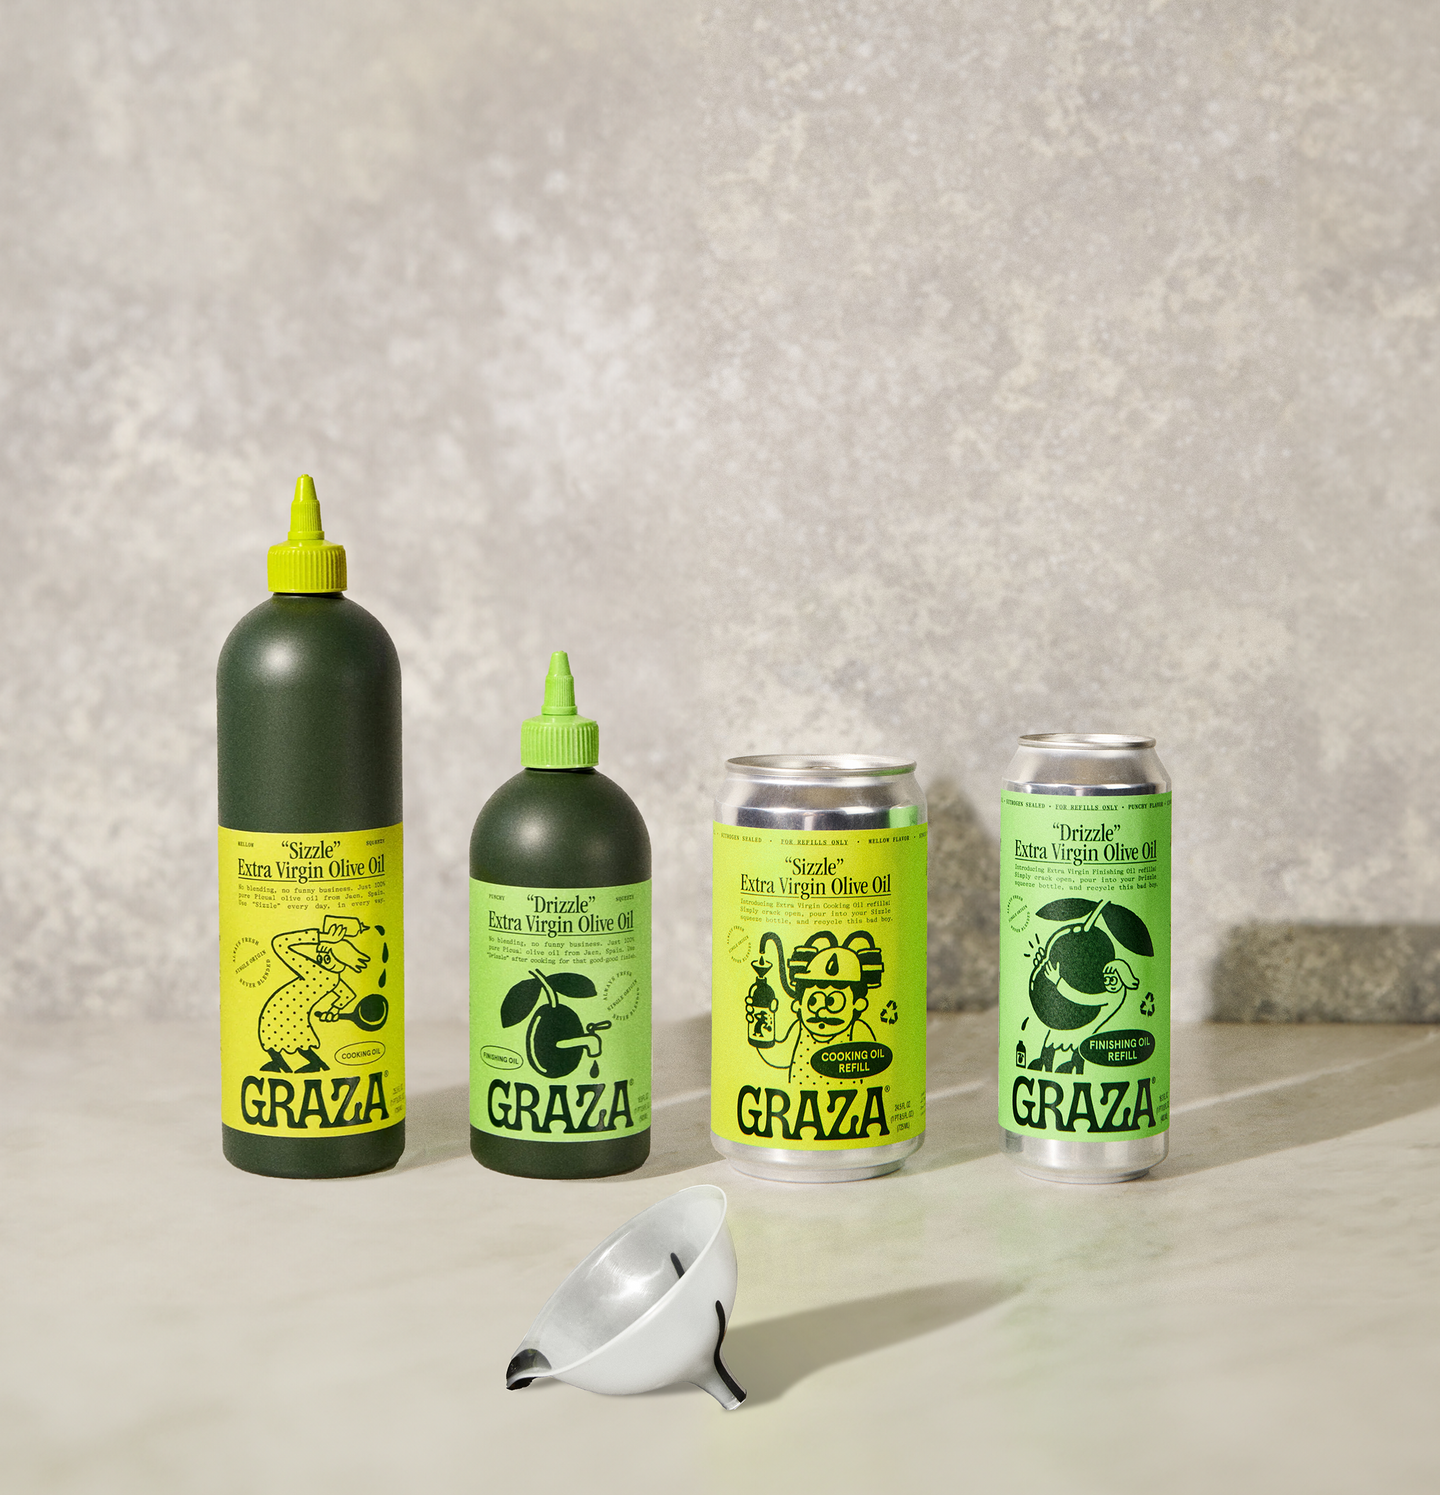 The Graza Olive Oil Starter Kit